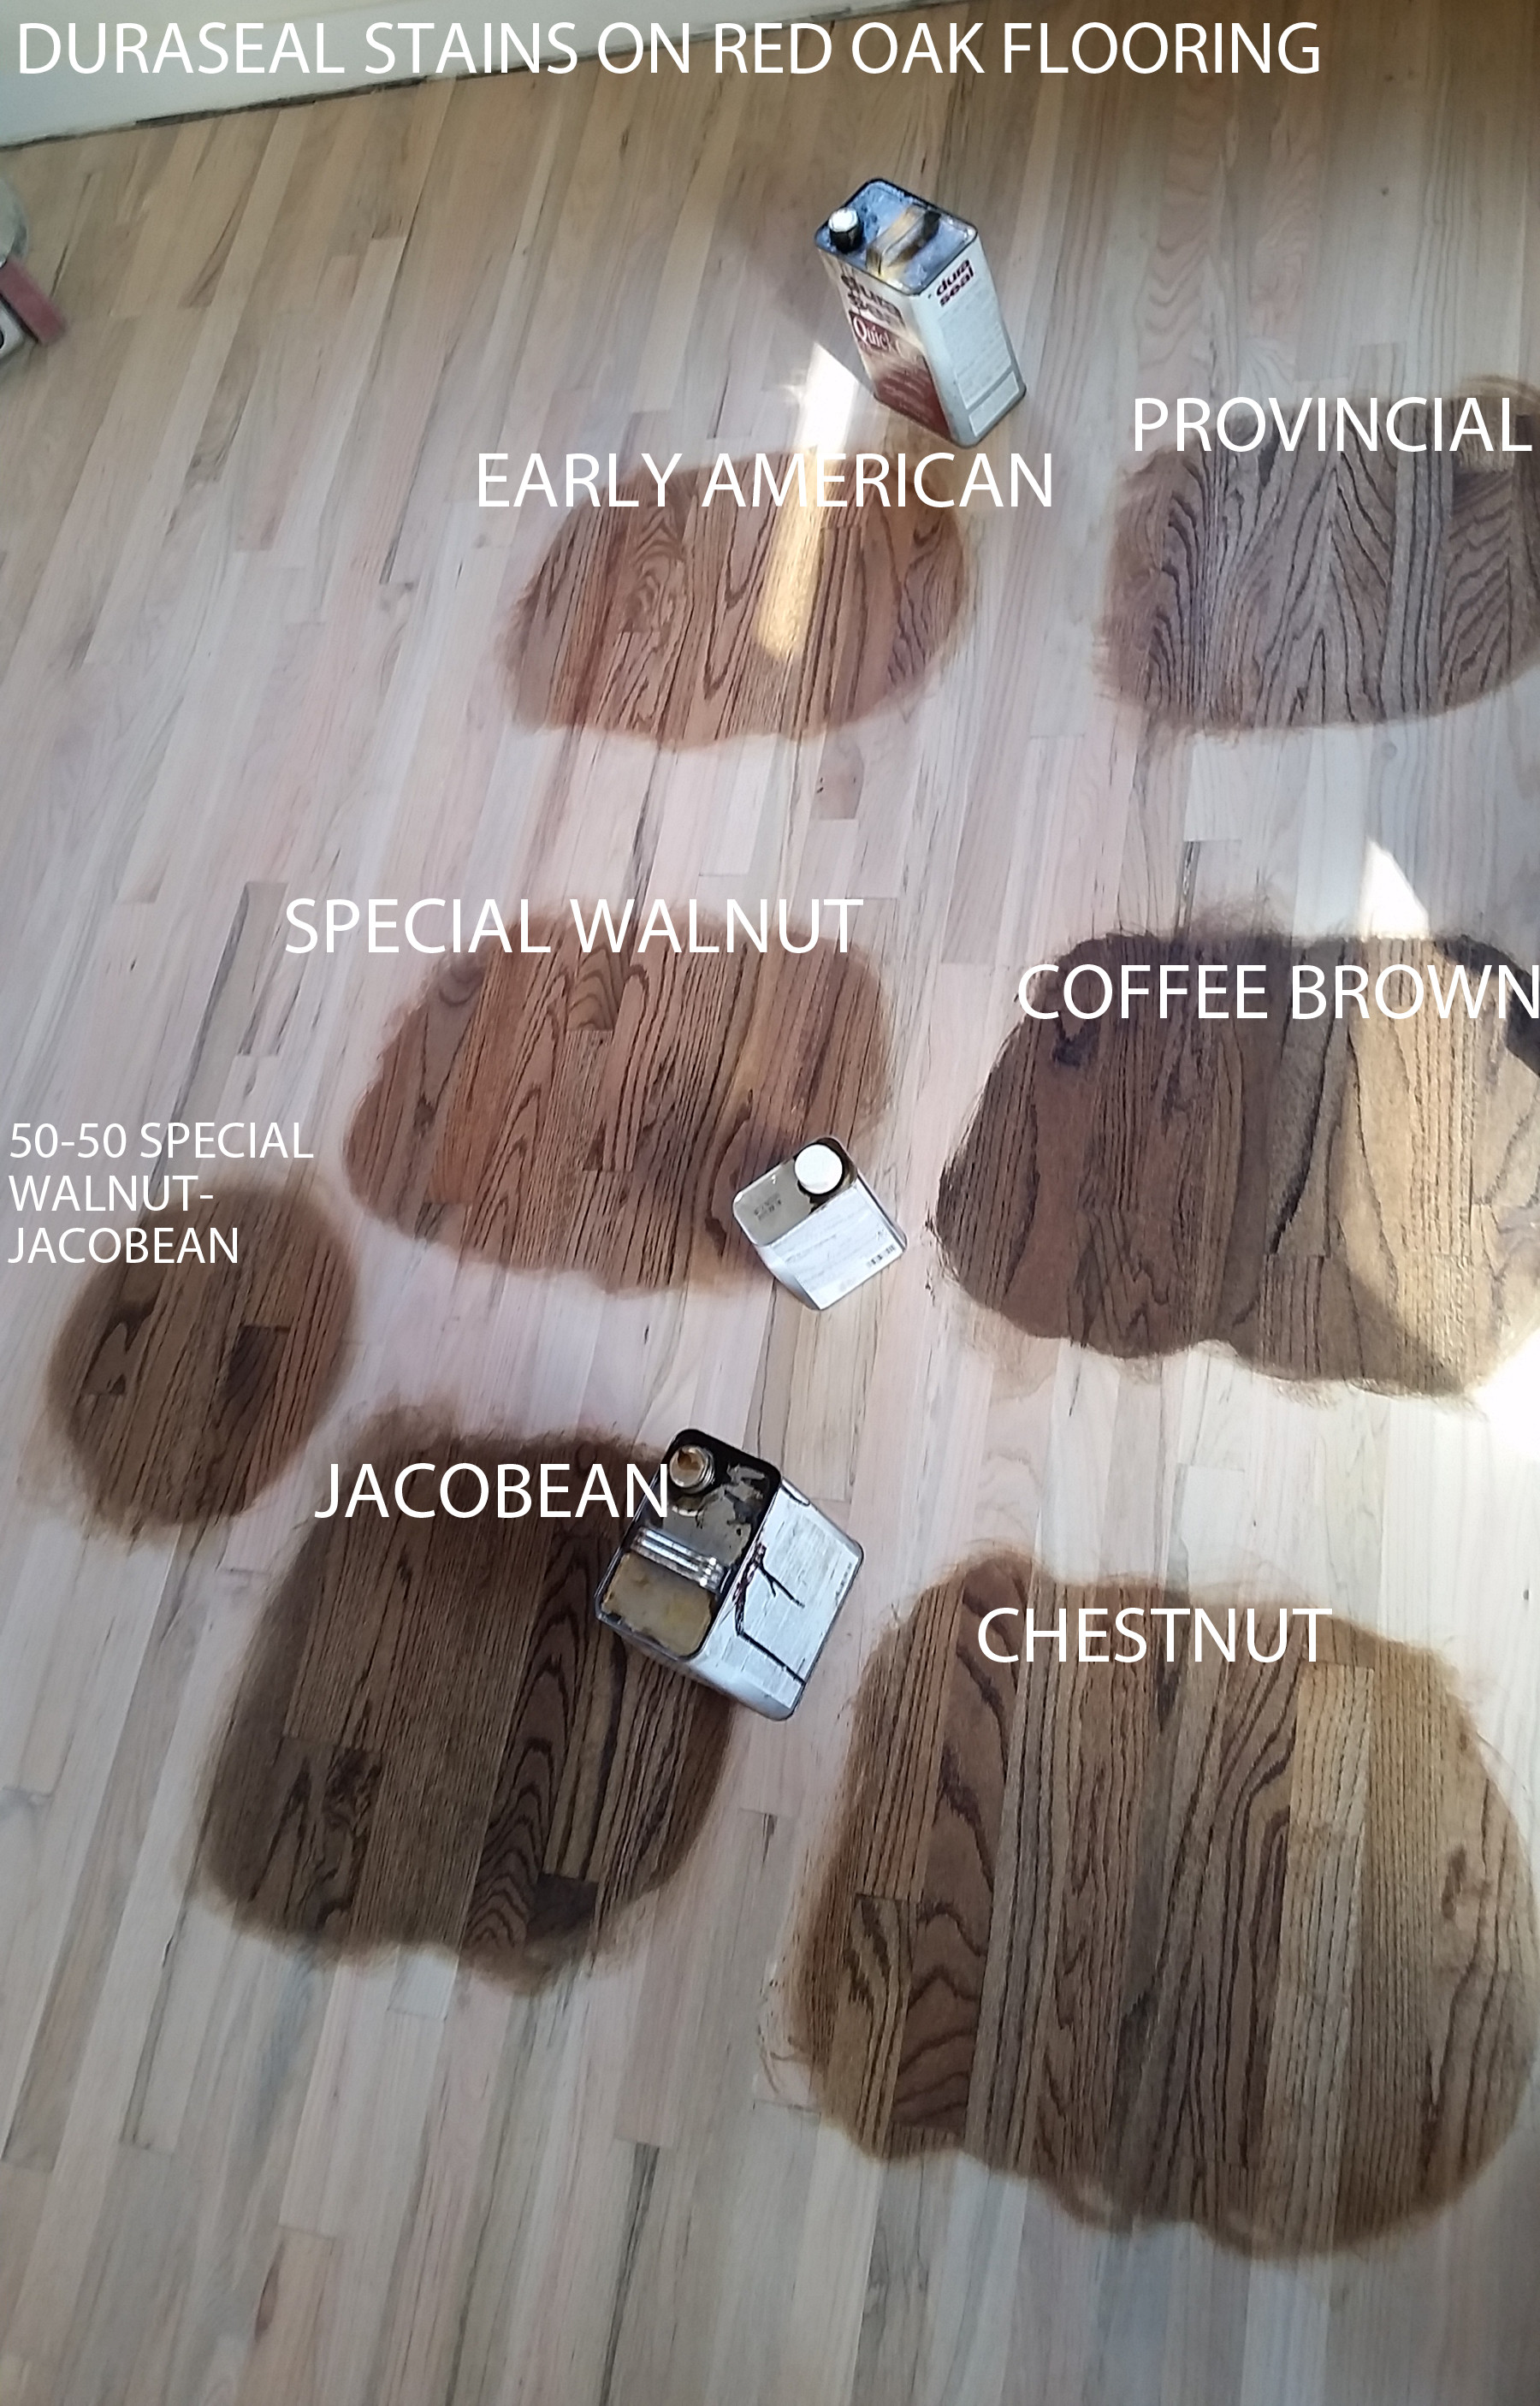 3 4 red oak hardwood flooring of duraseal stain on red oak wood flooring chestnut jacobean coffee for duraseal stain on red oak wood flooring chestnut jacobean coffee brown special